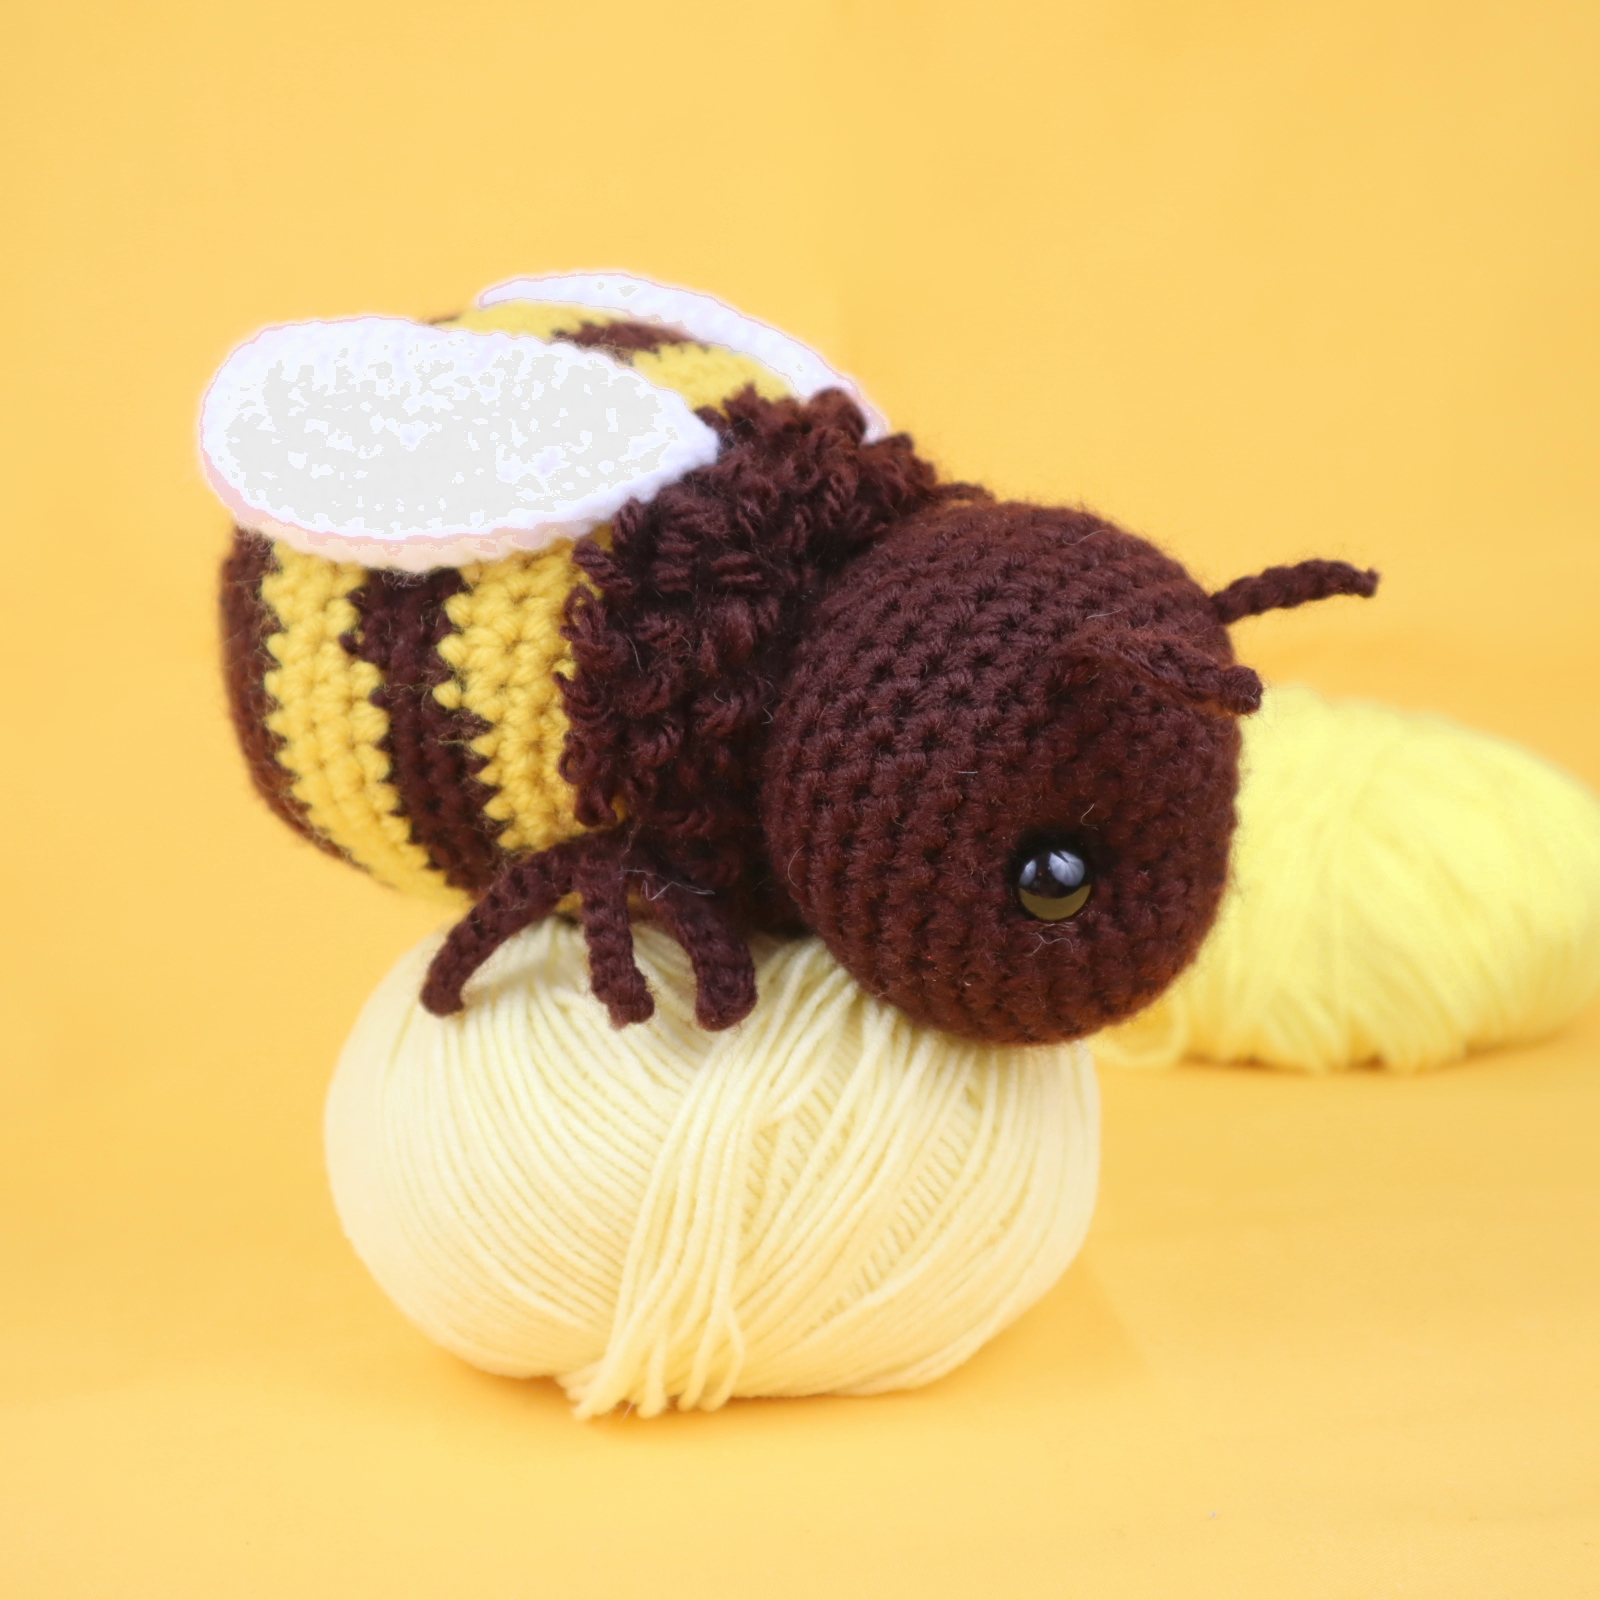 crochet bumble bee pattern